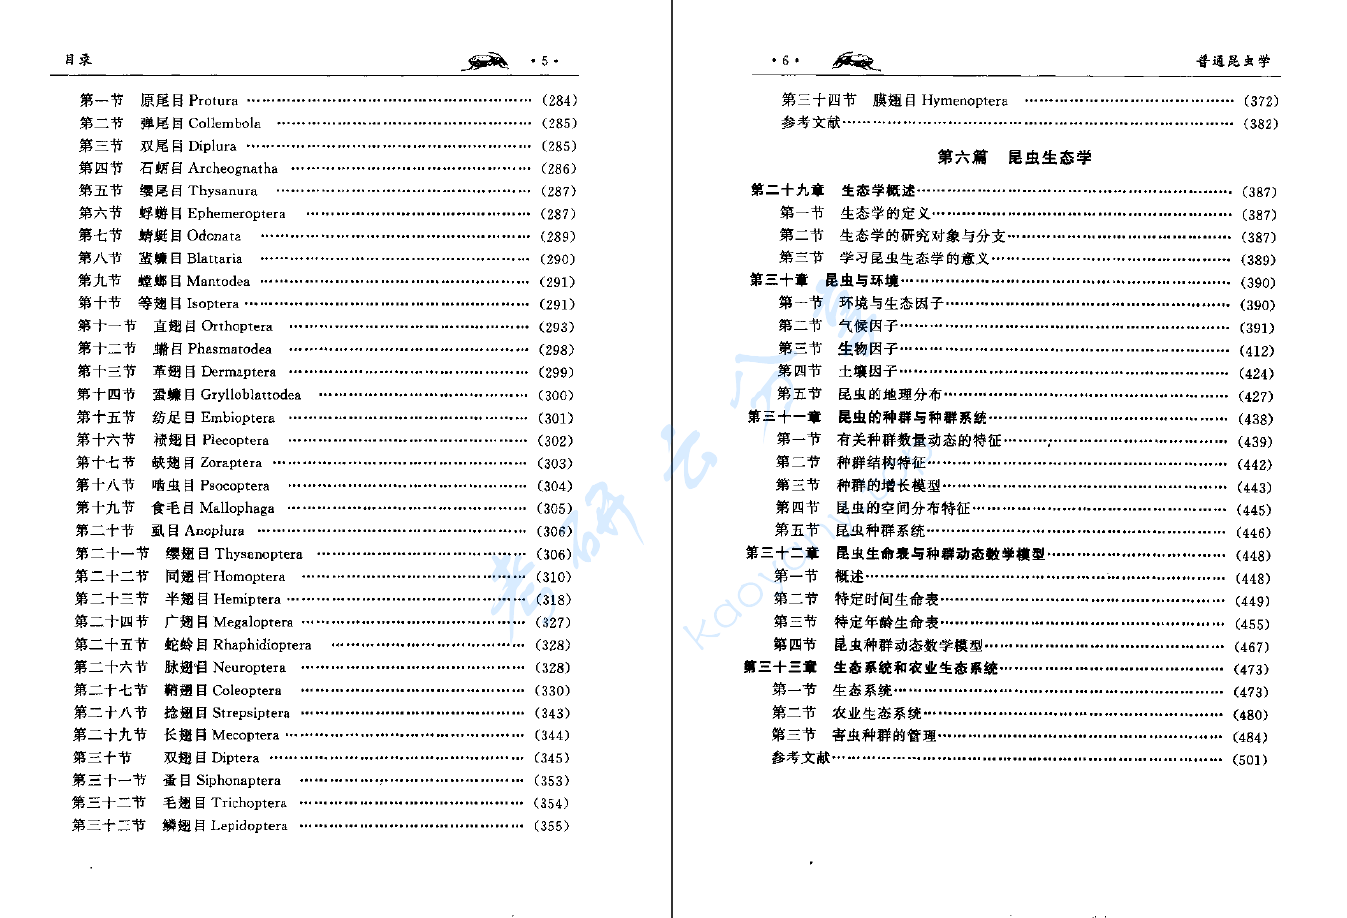 《普通昆虫学》彩万志.pdf,image.png,普通昆虫学,彩万志,第4张